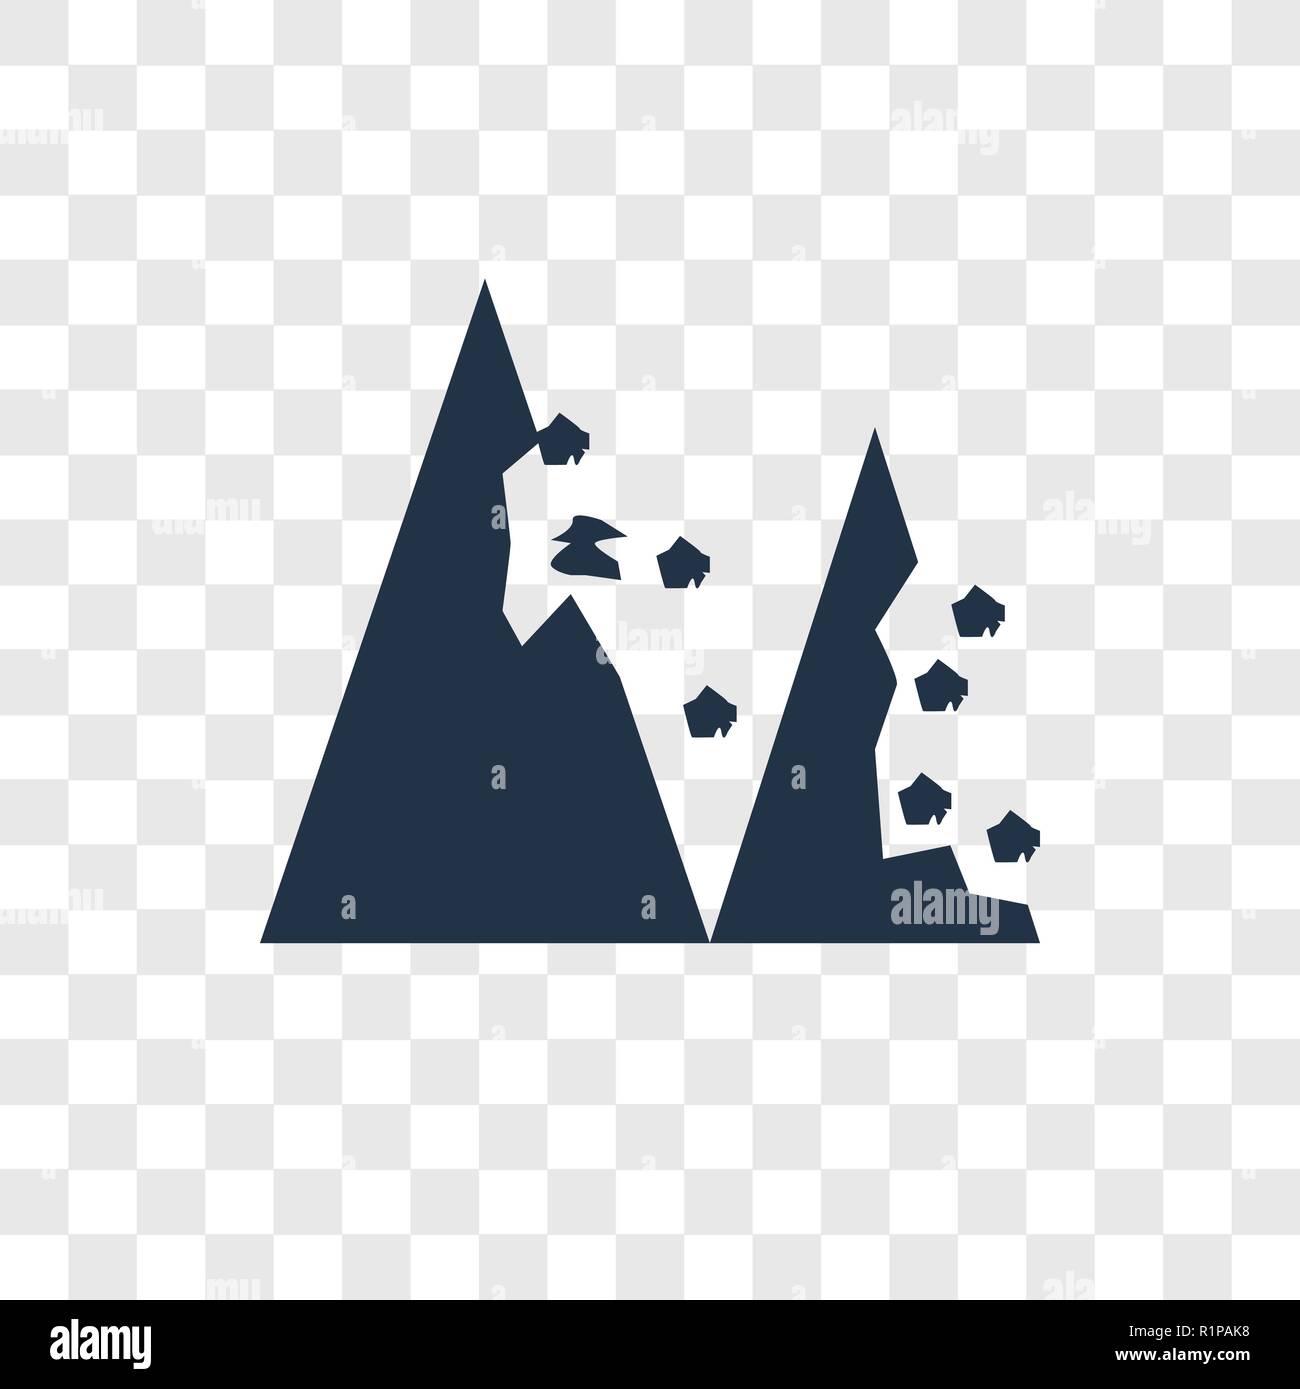 Landslide vector icon isolated on transparent background, Landslide transparency logo concept Stock Vector